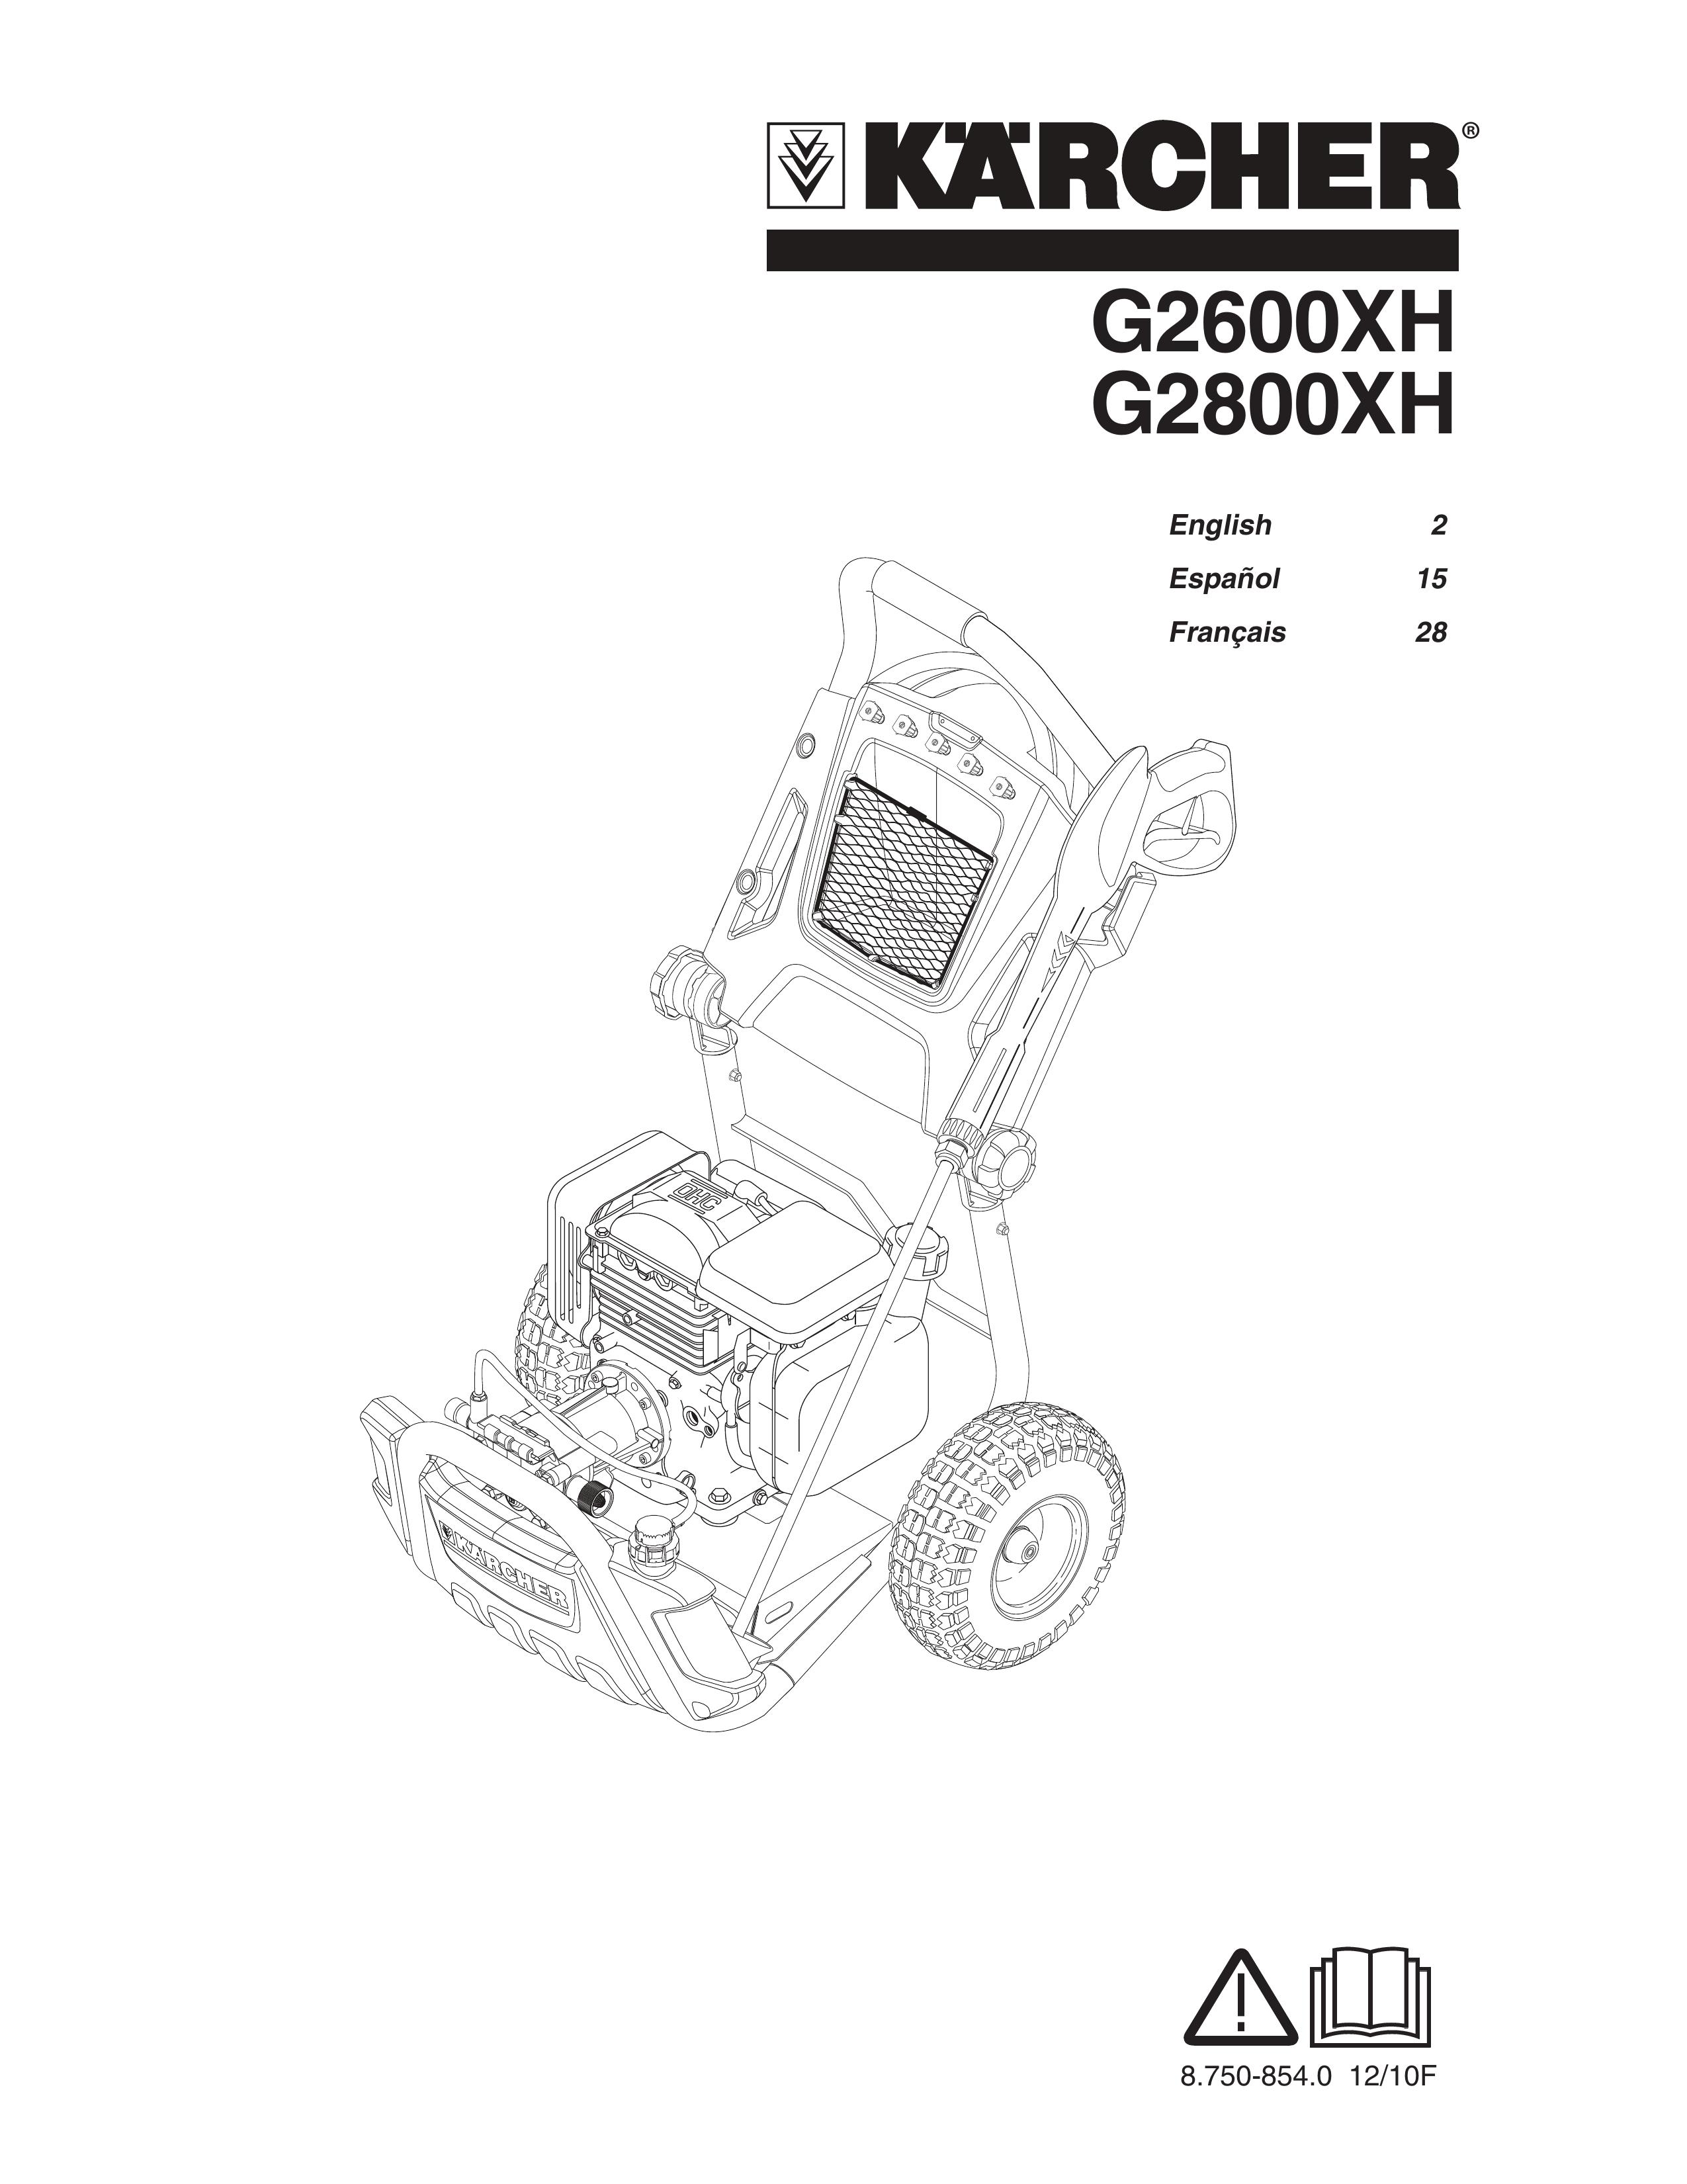 Karcher G2800XH Pressure Washer User Manual